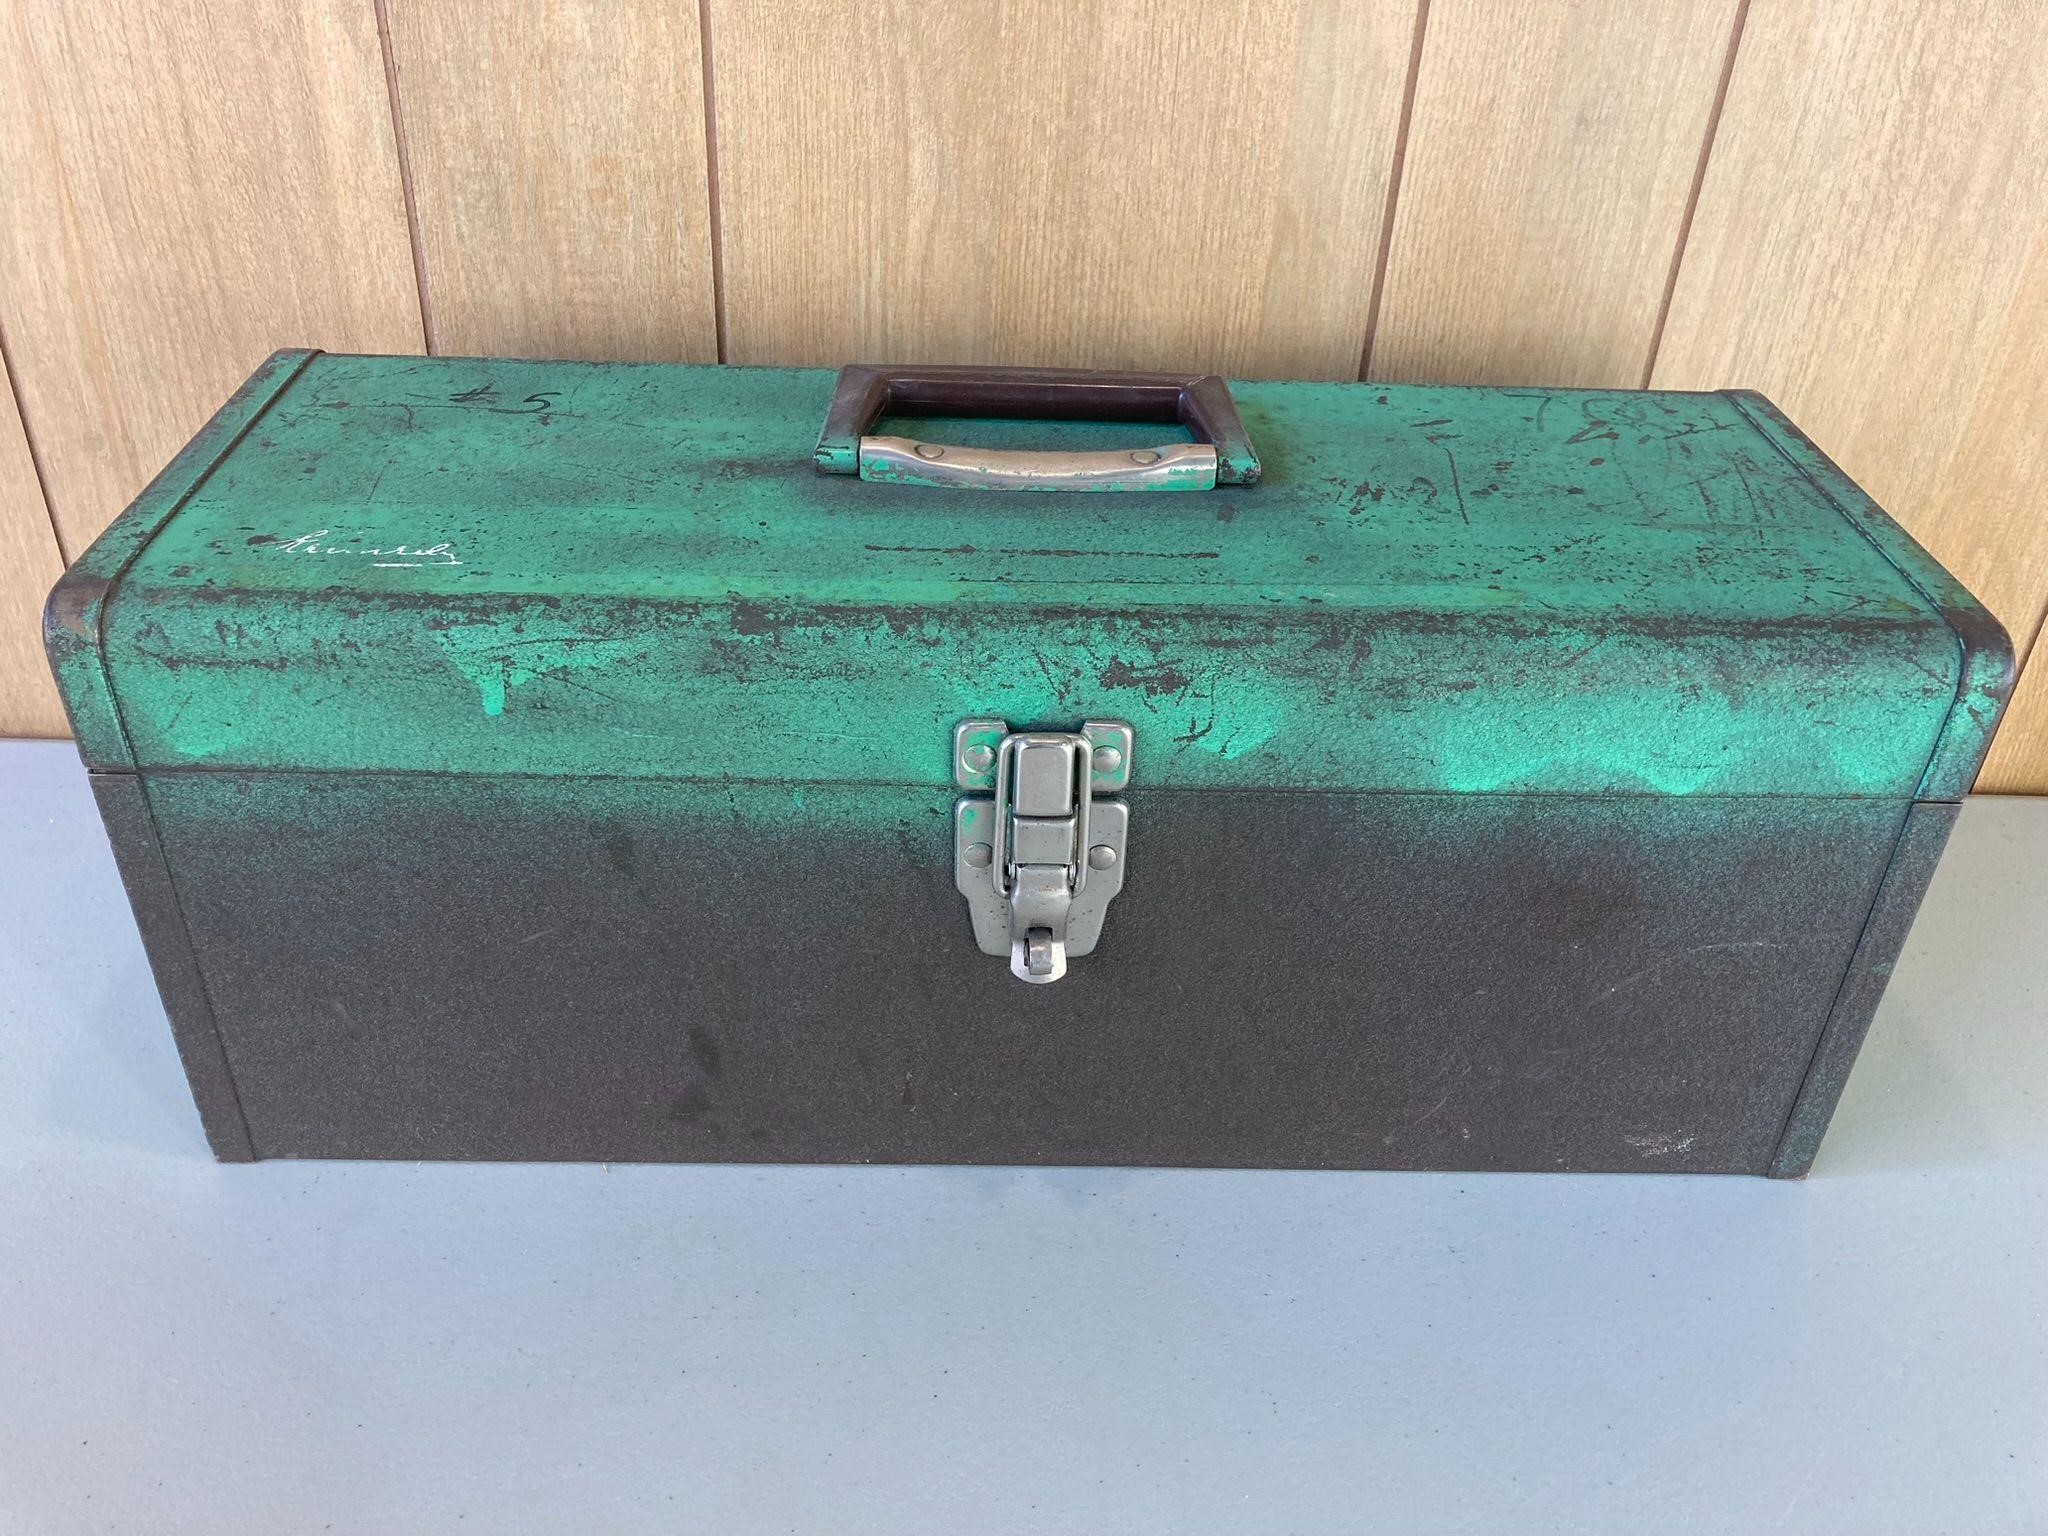 Vintage Kennedy Tool Box